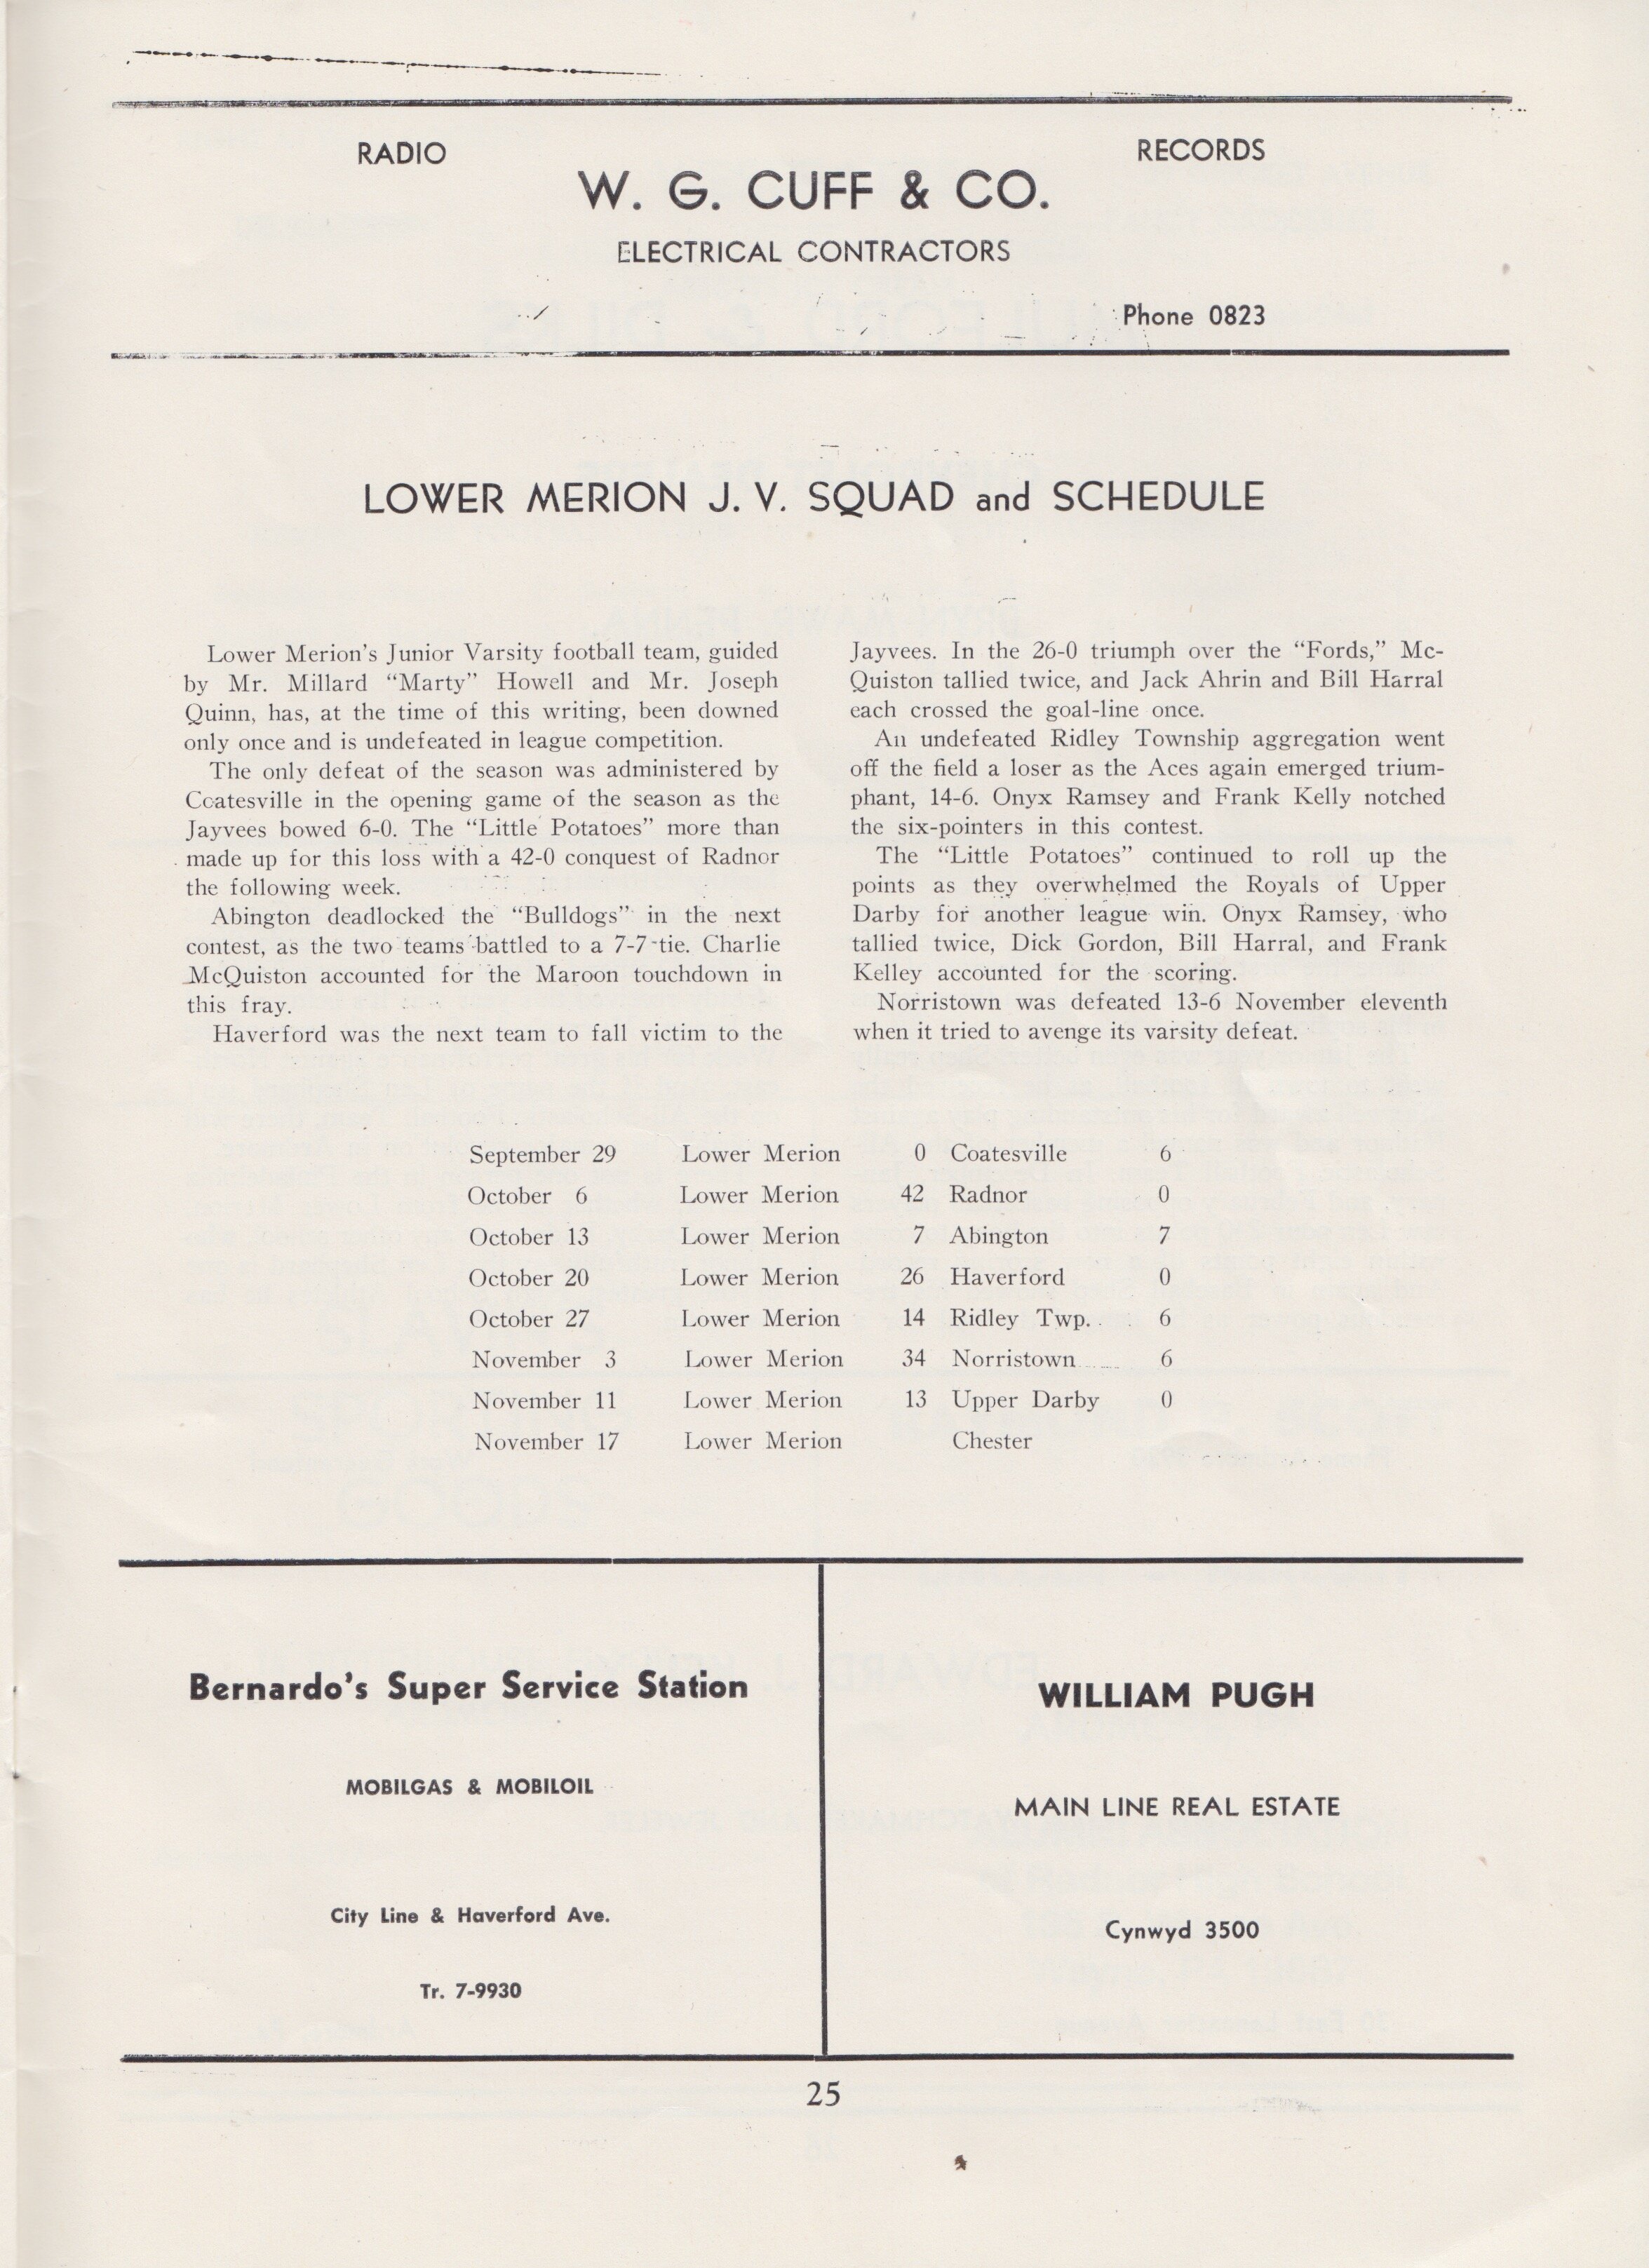 1947 Radnor v. LM Program RAA 24.jpeg